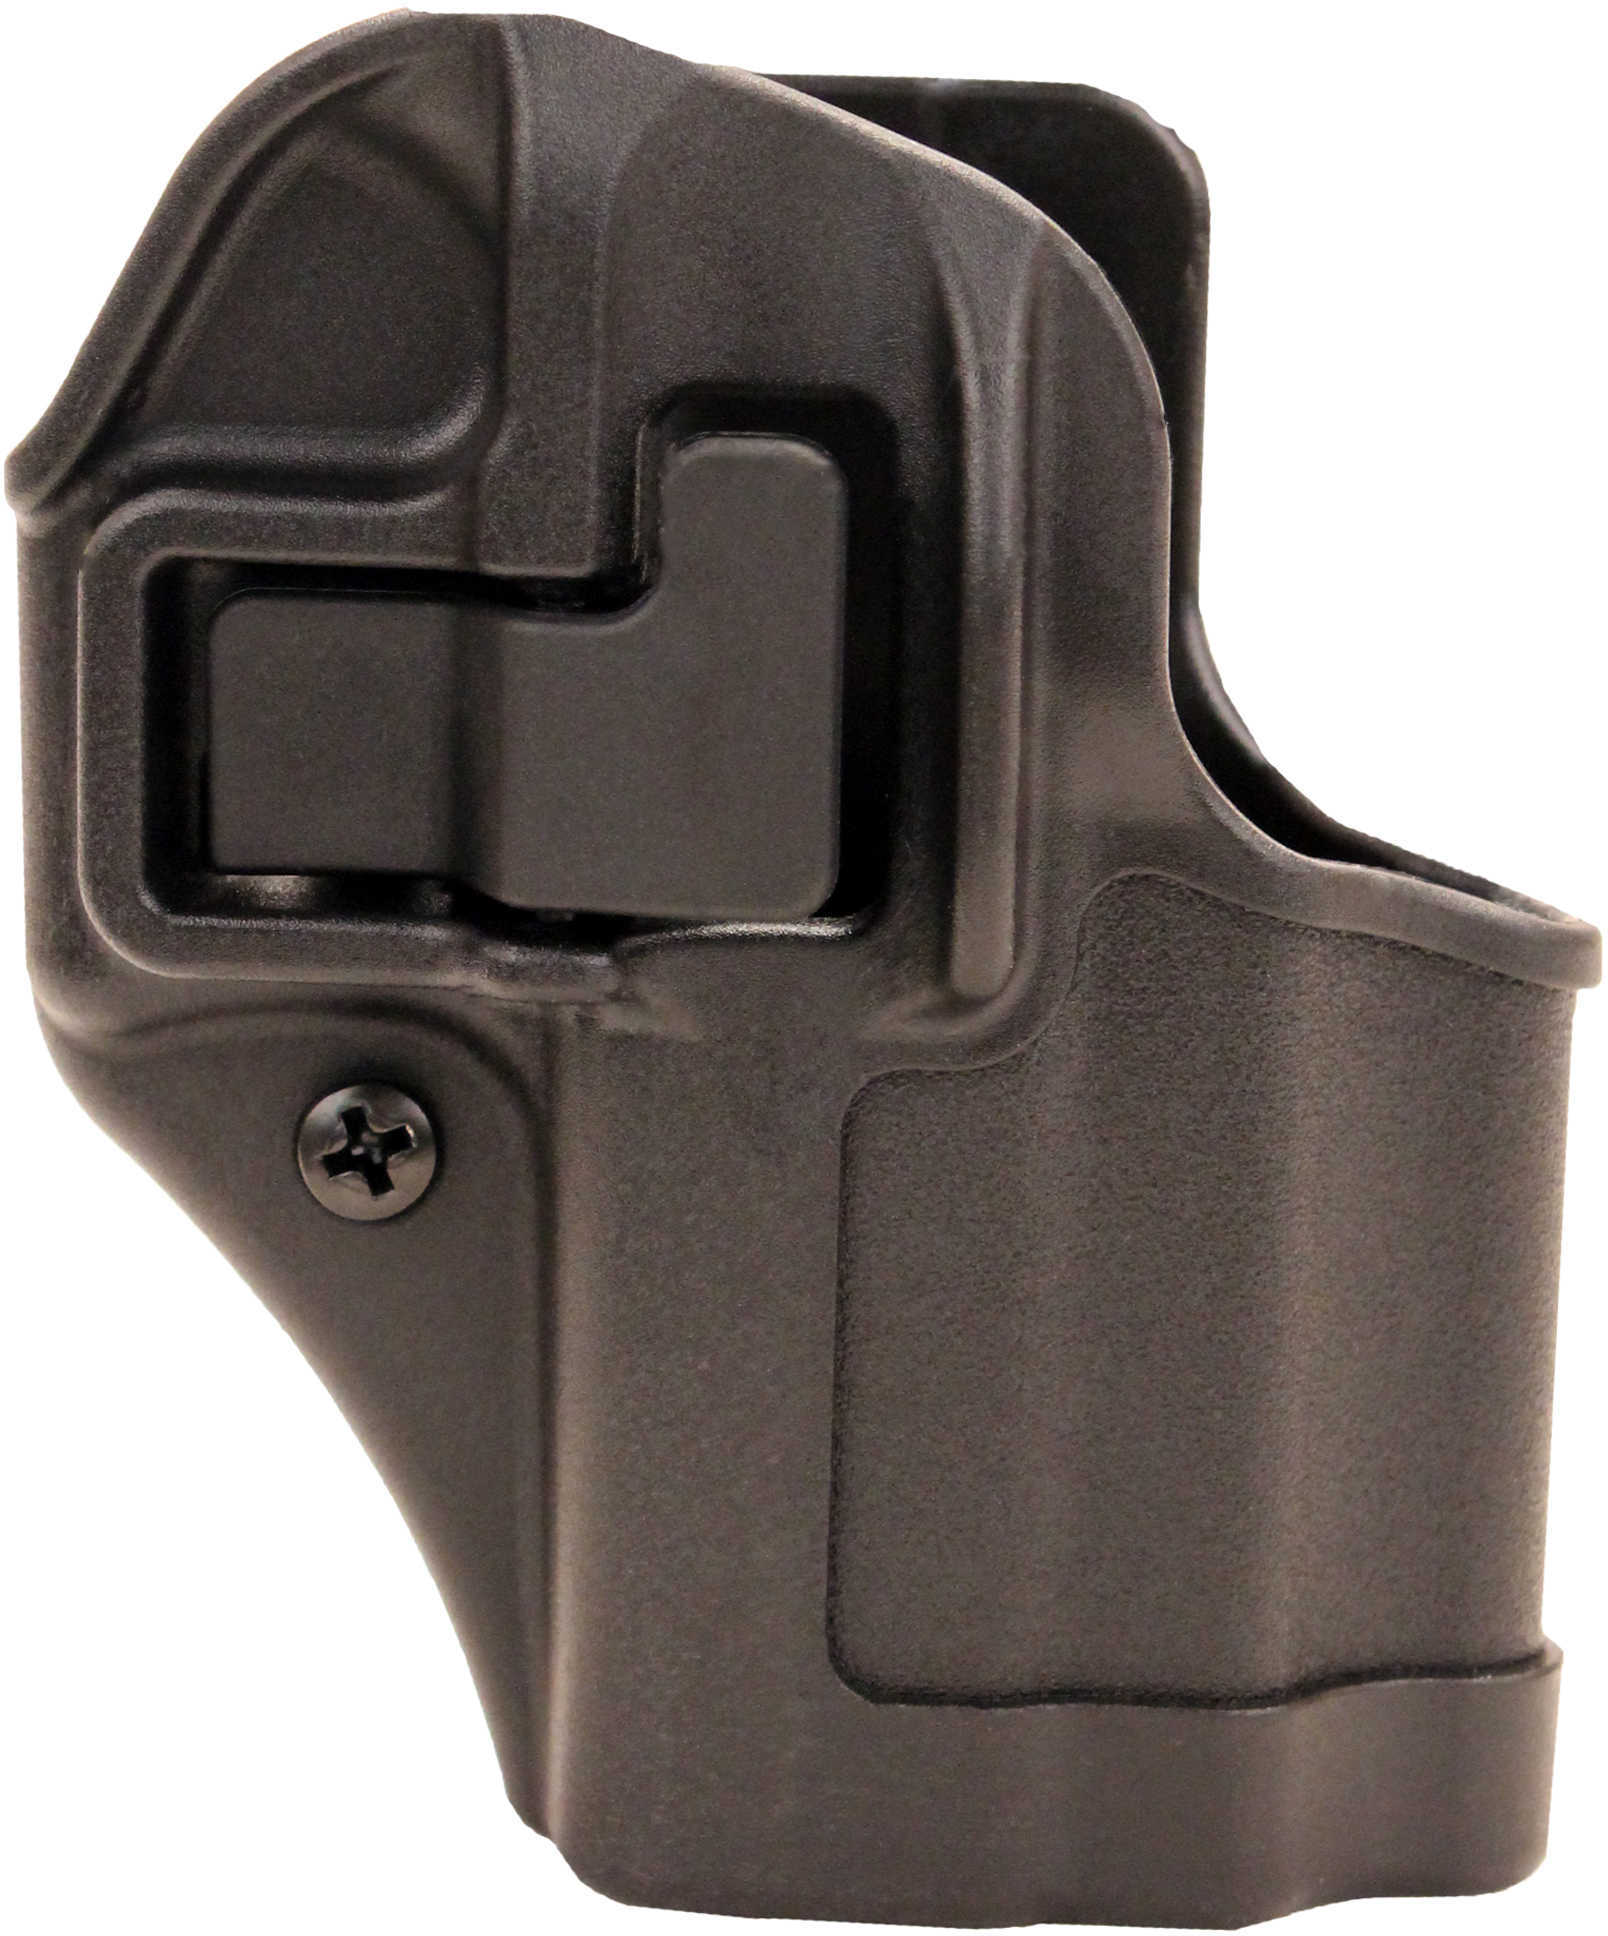 Blackhawk 410568BKR Serpa CQC Concealment Matte Polymer OWB Fits Glock 43 Right Hand